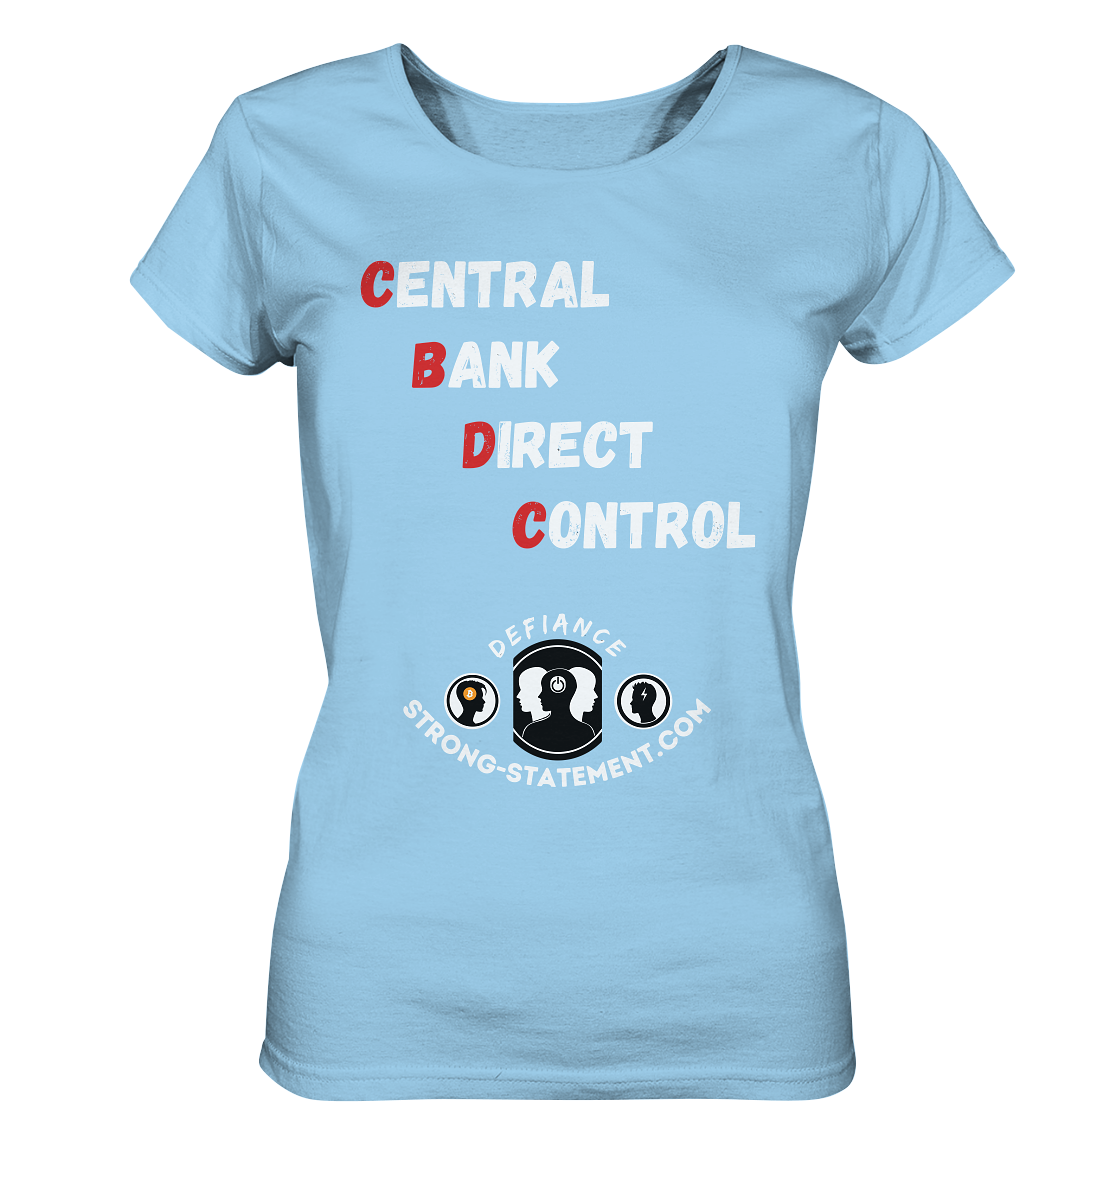 CENTRAL BANK DIRECT CONTROL -DEFIANCE -Strong-Statement.com (Ladies Collection 21% Rabatt bis zum Halving 2024)  - Ladies Organic Shirt